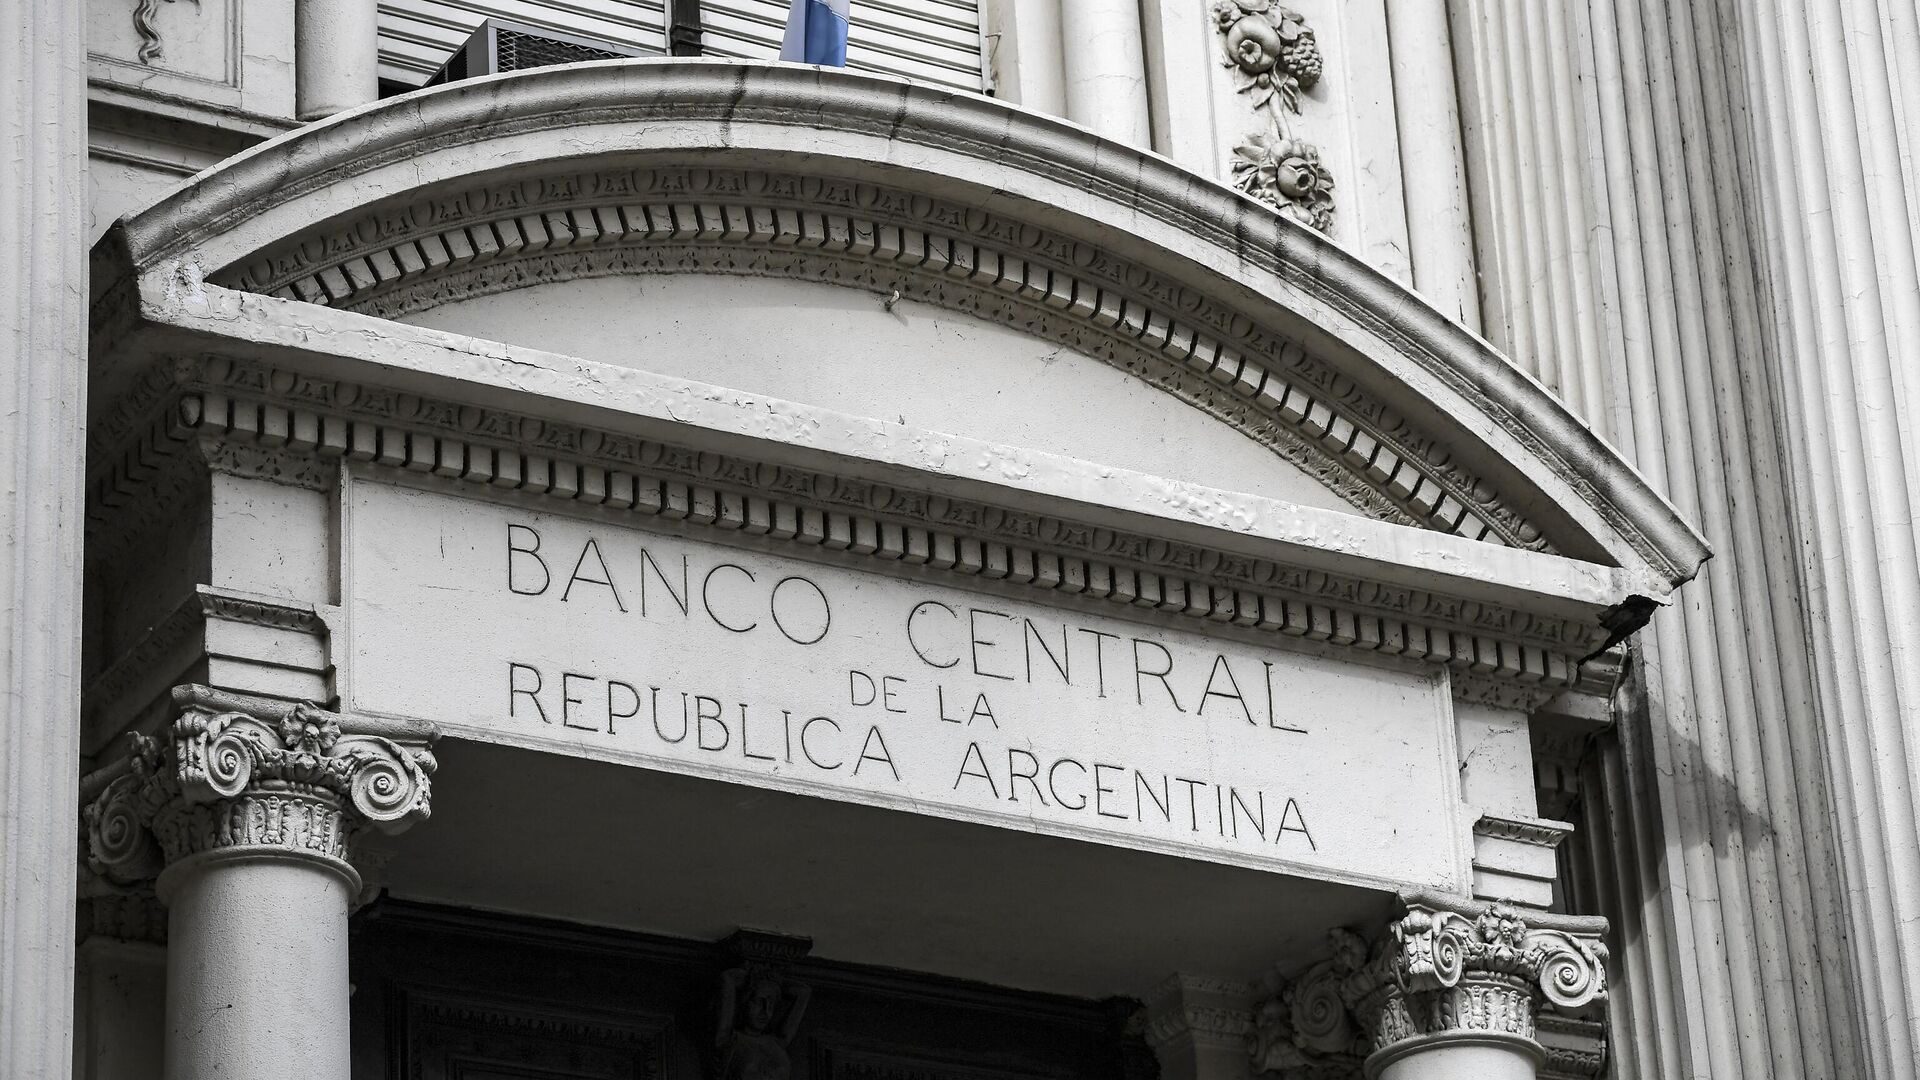 Banco central Argentina